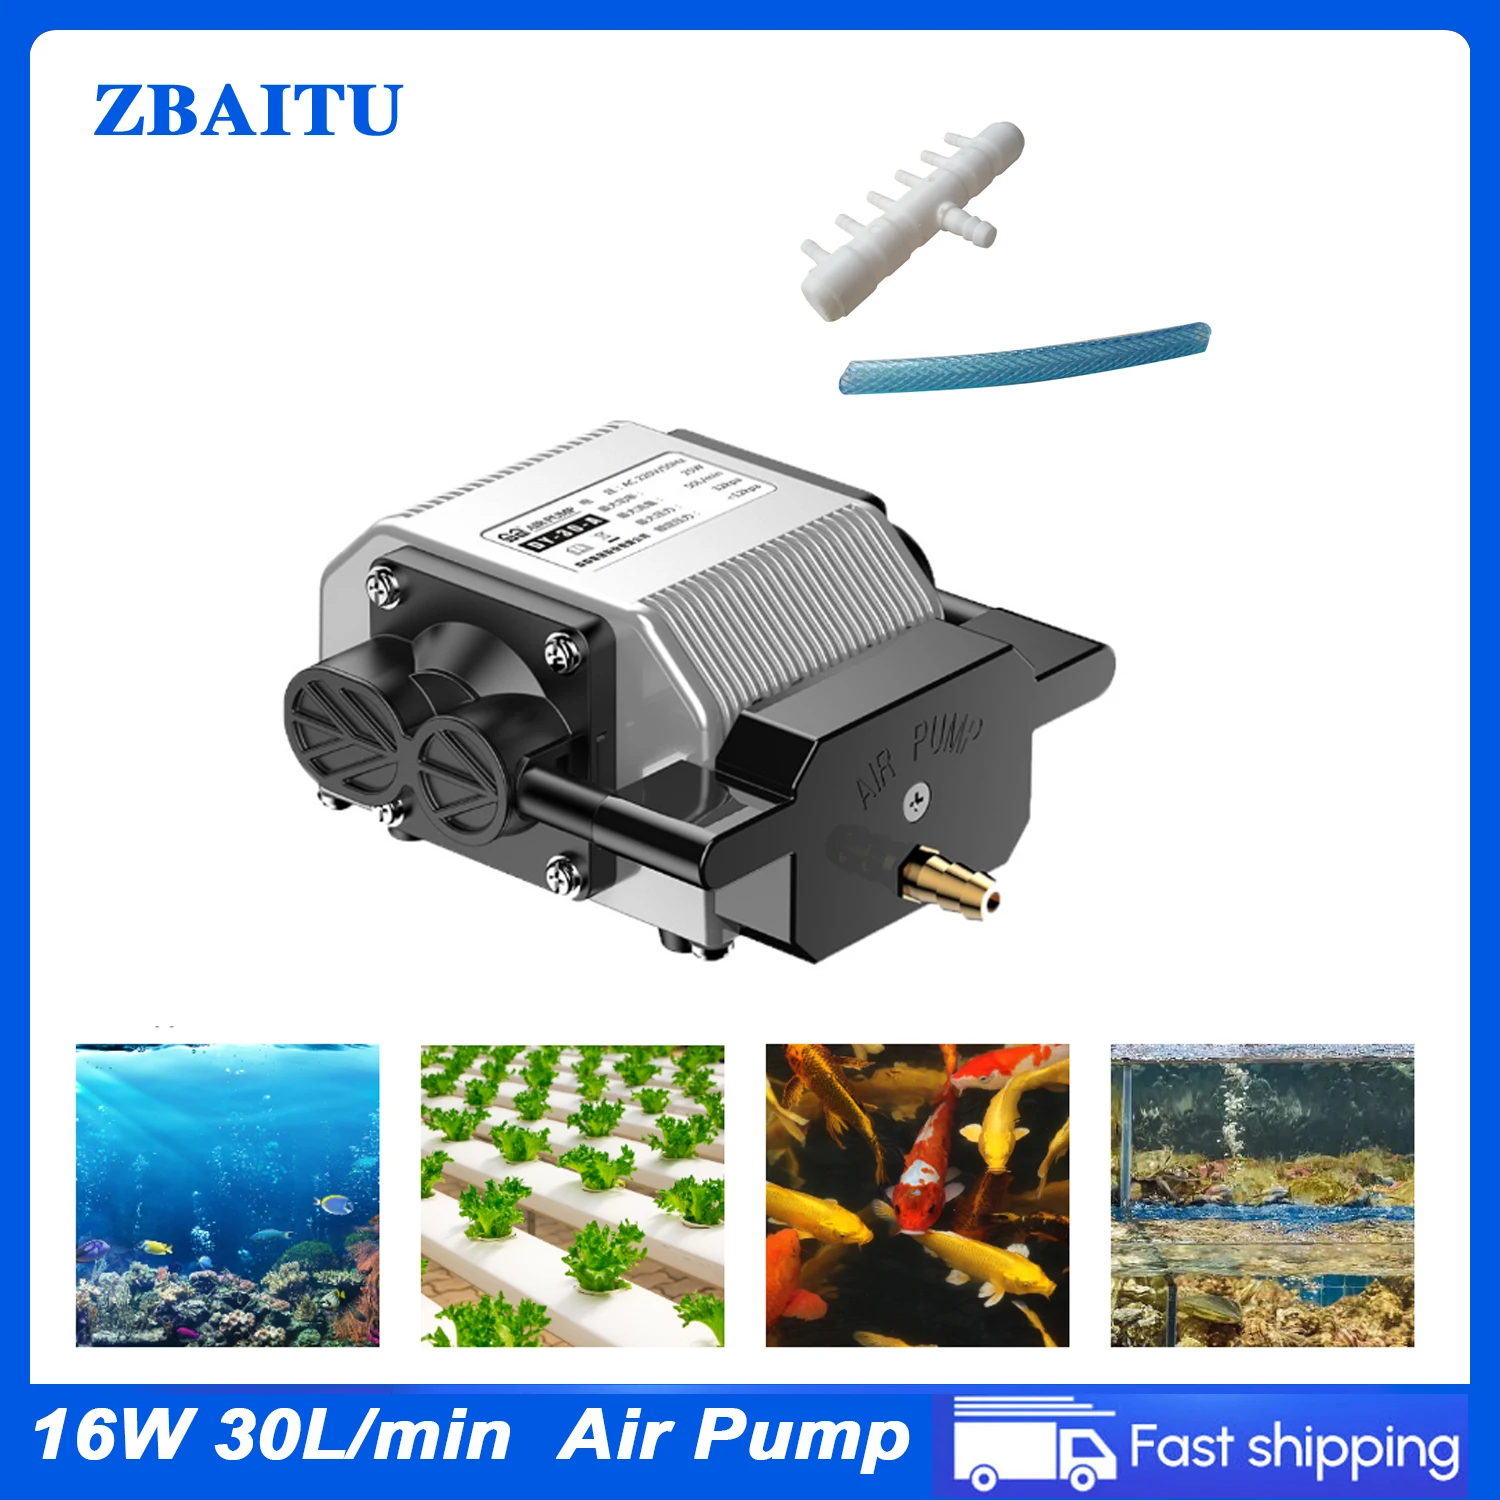 ZBAITU Air Pump for Aquariums Hydroponic Systems with Air Flow Control Lever Valve Adjustable Airflow Fish Tank 16W 30L/min